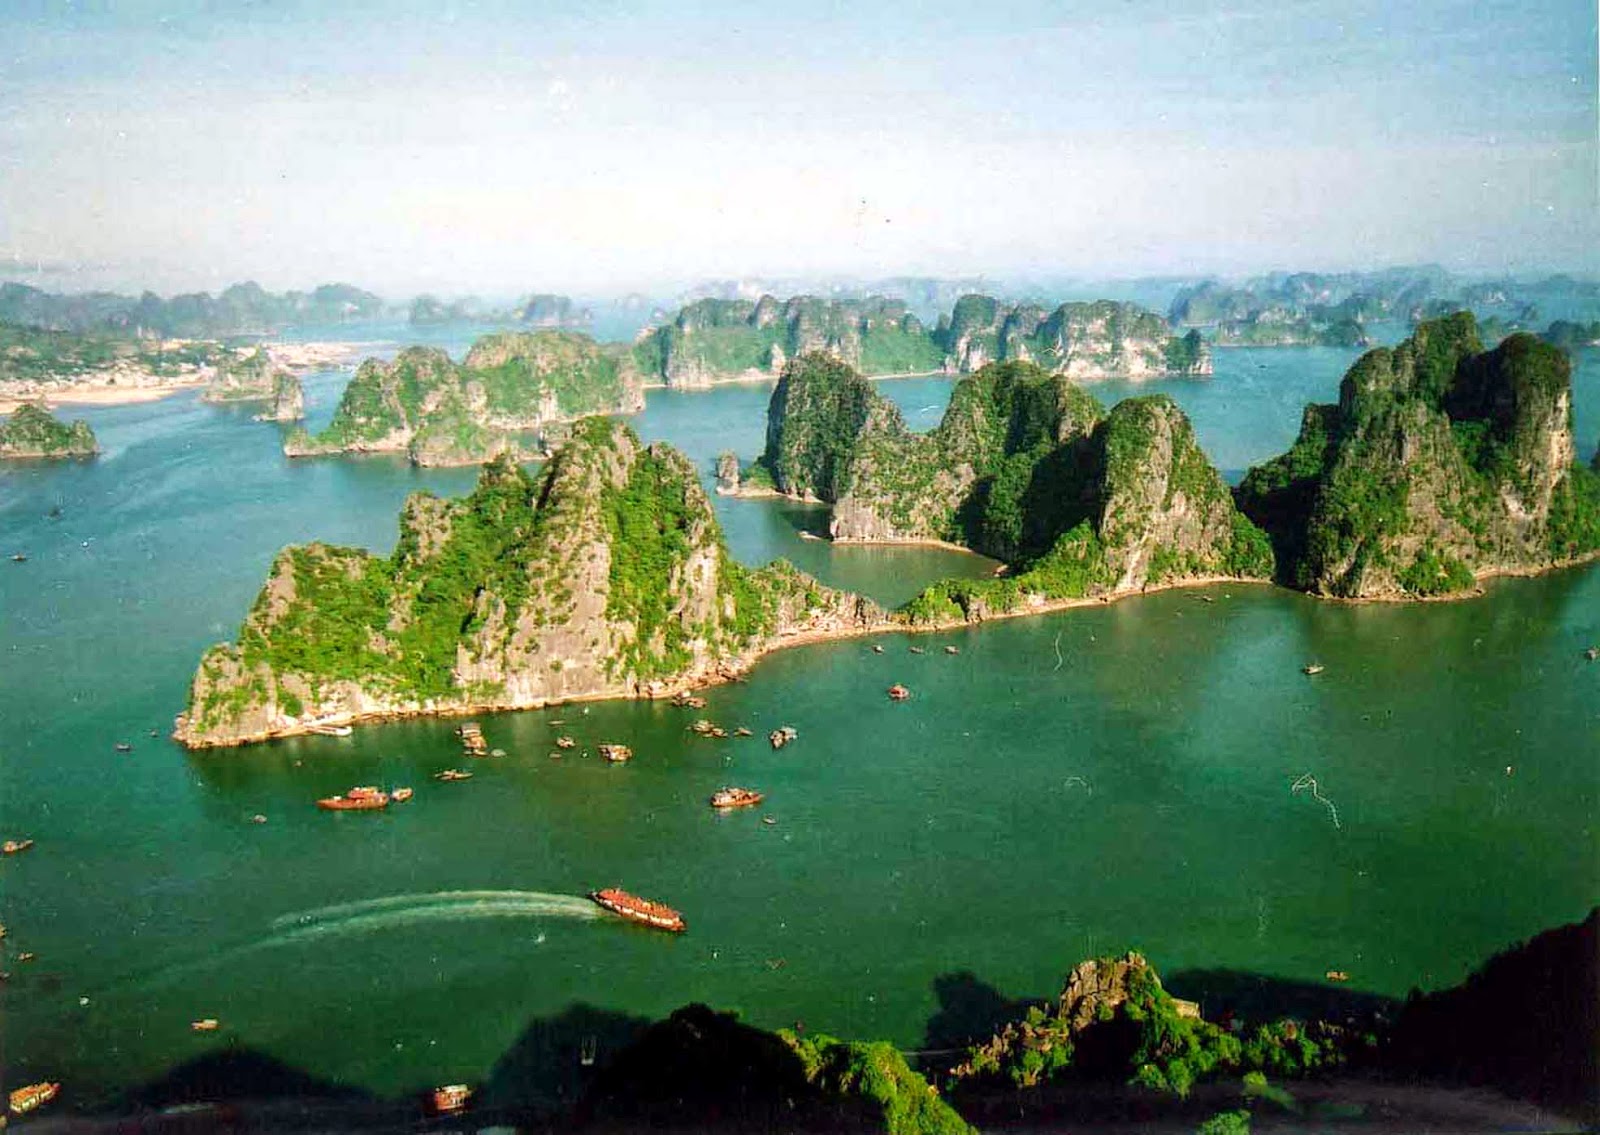 Discover Vietnam: The beauty of Ha Long Bay - Vietnam Visa Services ...